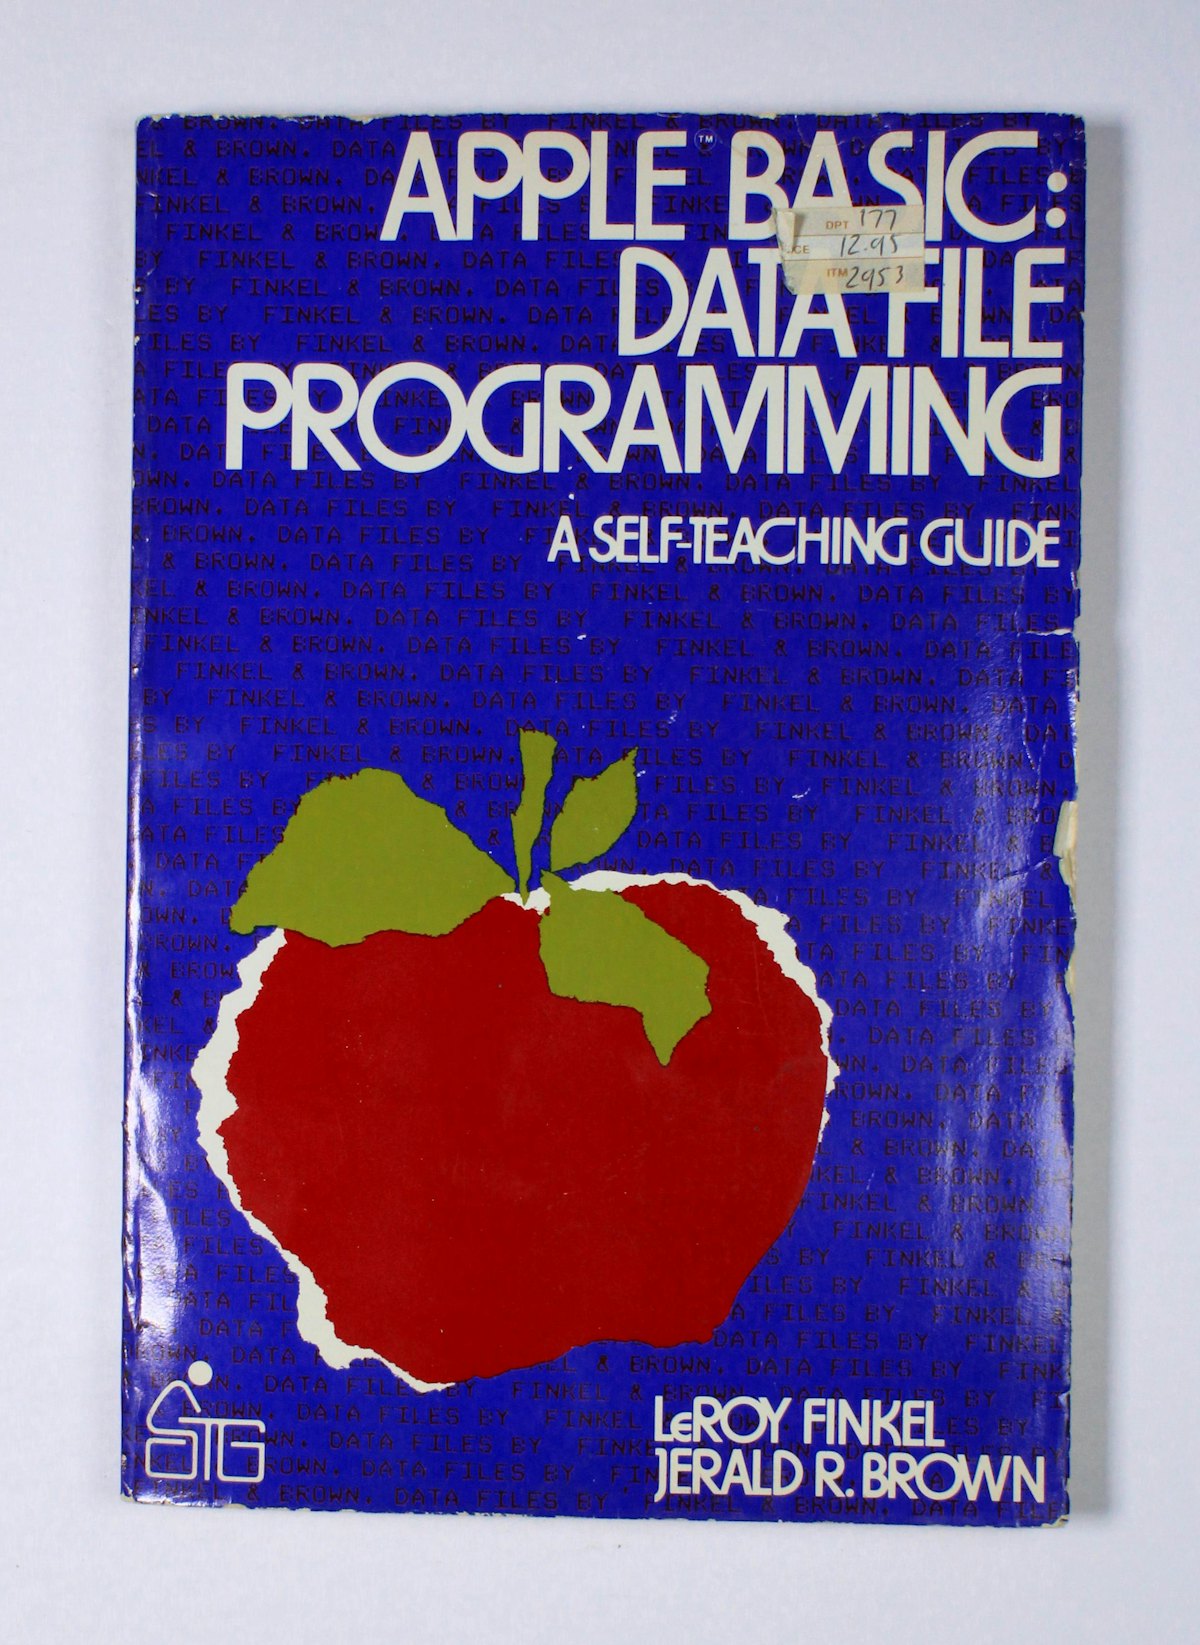 Apple BASIC: Data File Programming